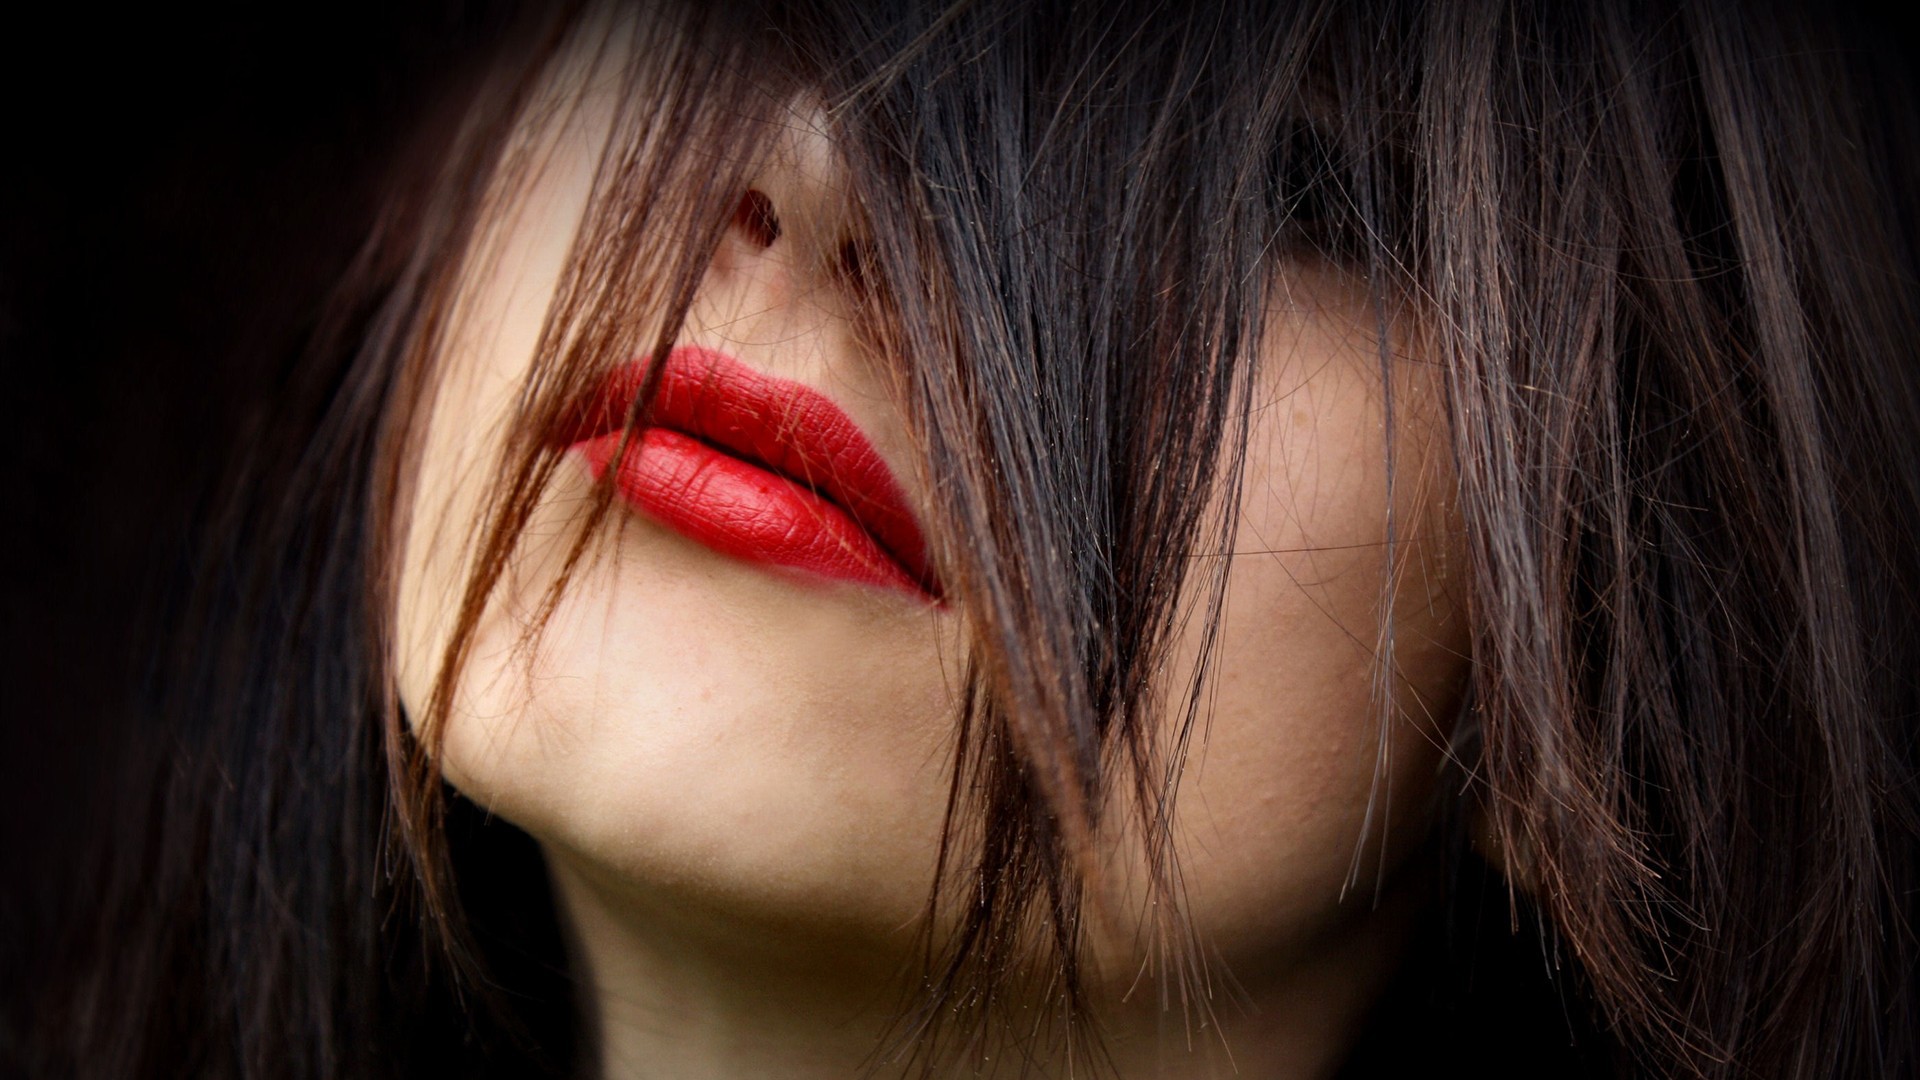 Women Lips Closeup Brunette Red Lipstick Wallpapers Hd Desktop And Mobile Backgrounds 